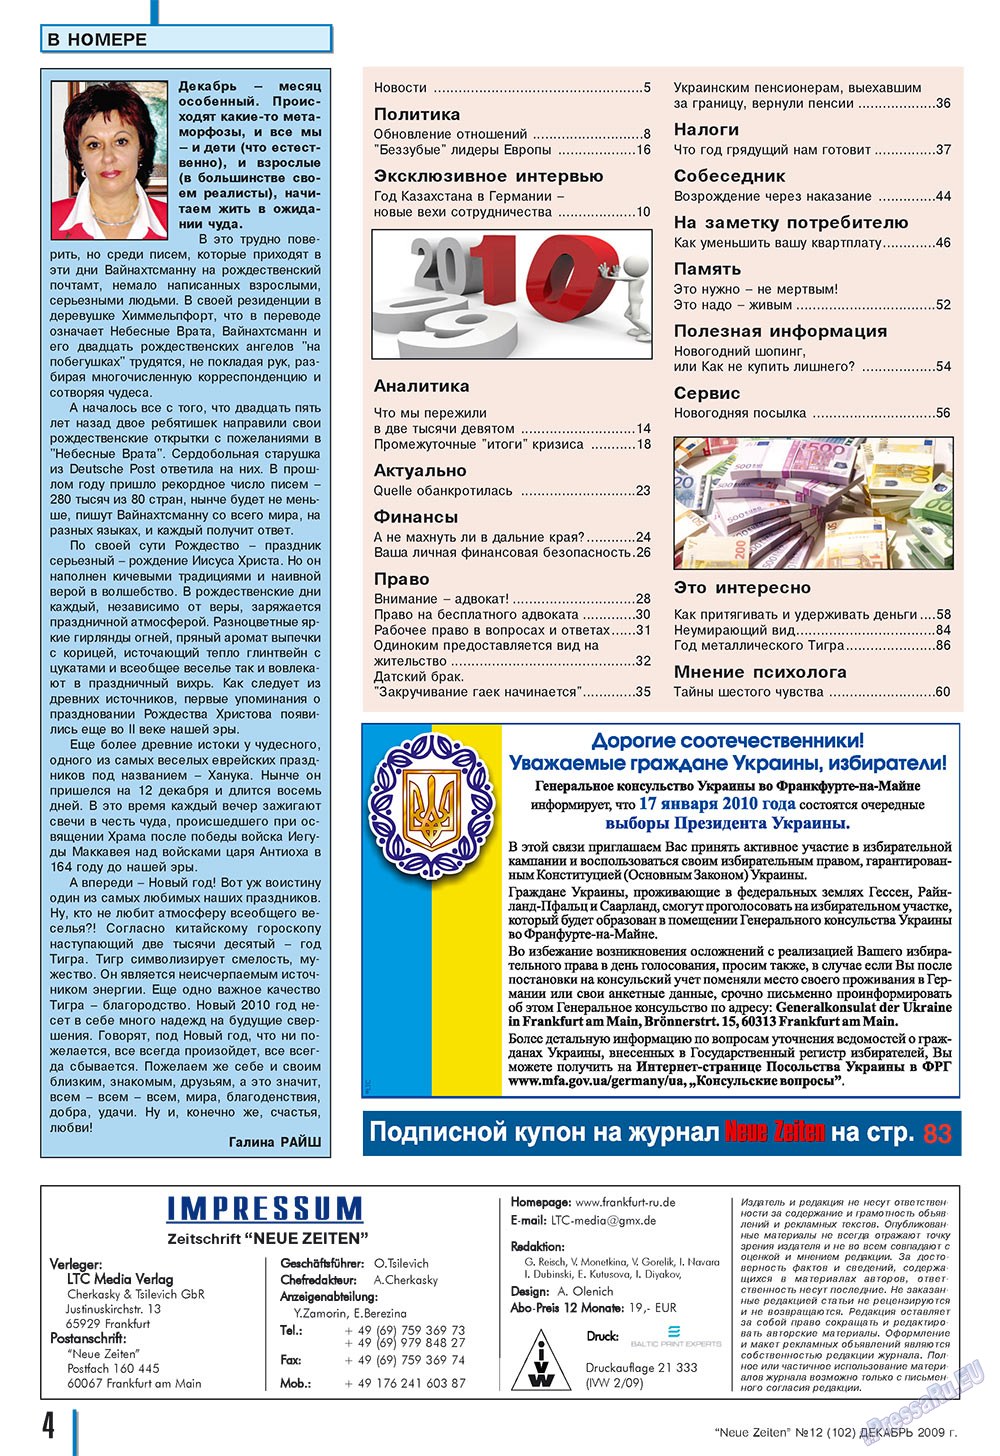 Neue Zeiten (журнал). 2009 год, номер 12, стр. 4